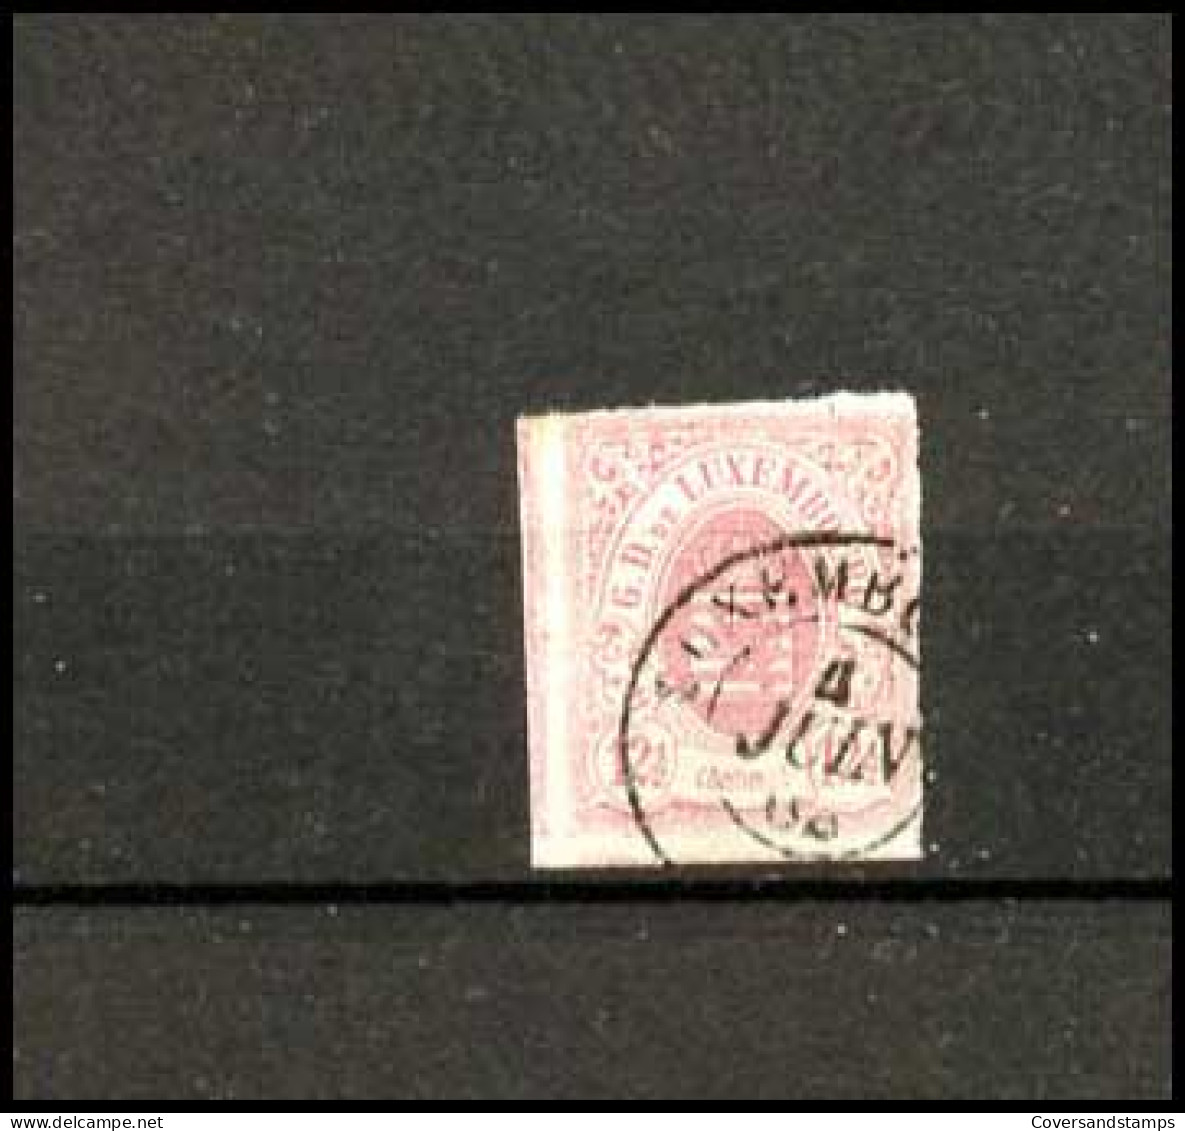 Luxembourg - Yt 7  -  Gestempeld / Oblitéré                    - 1859-1880 Wappen & Heraldik